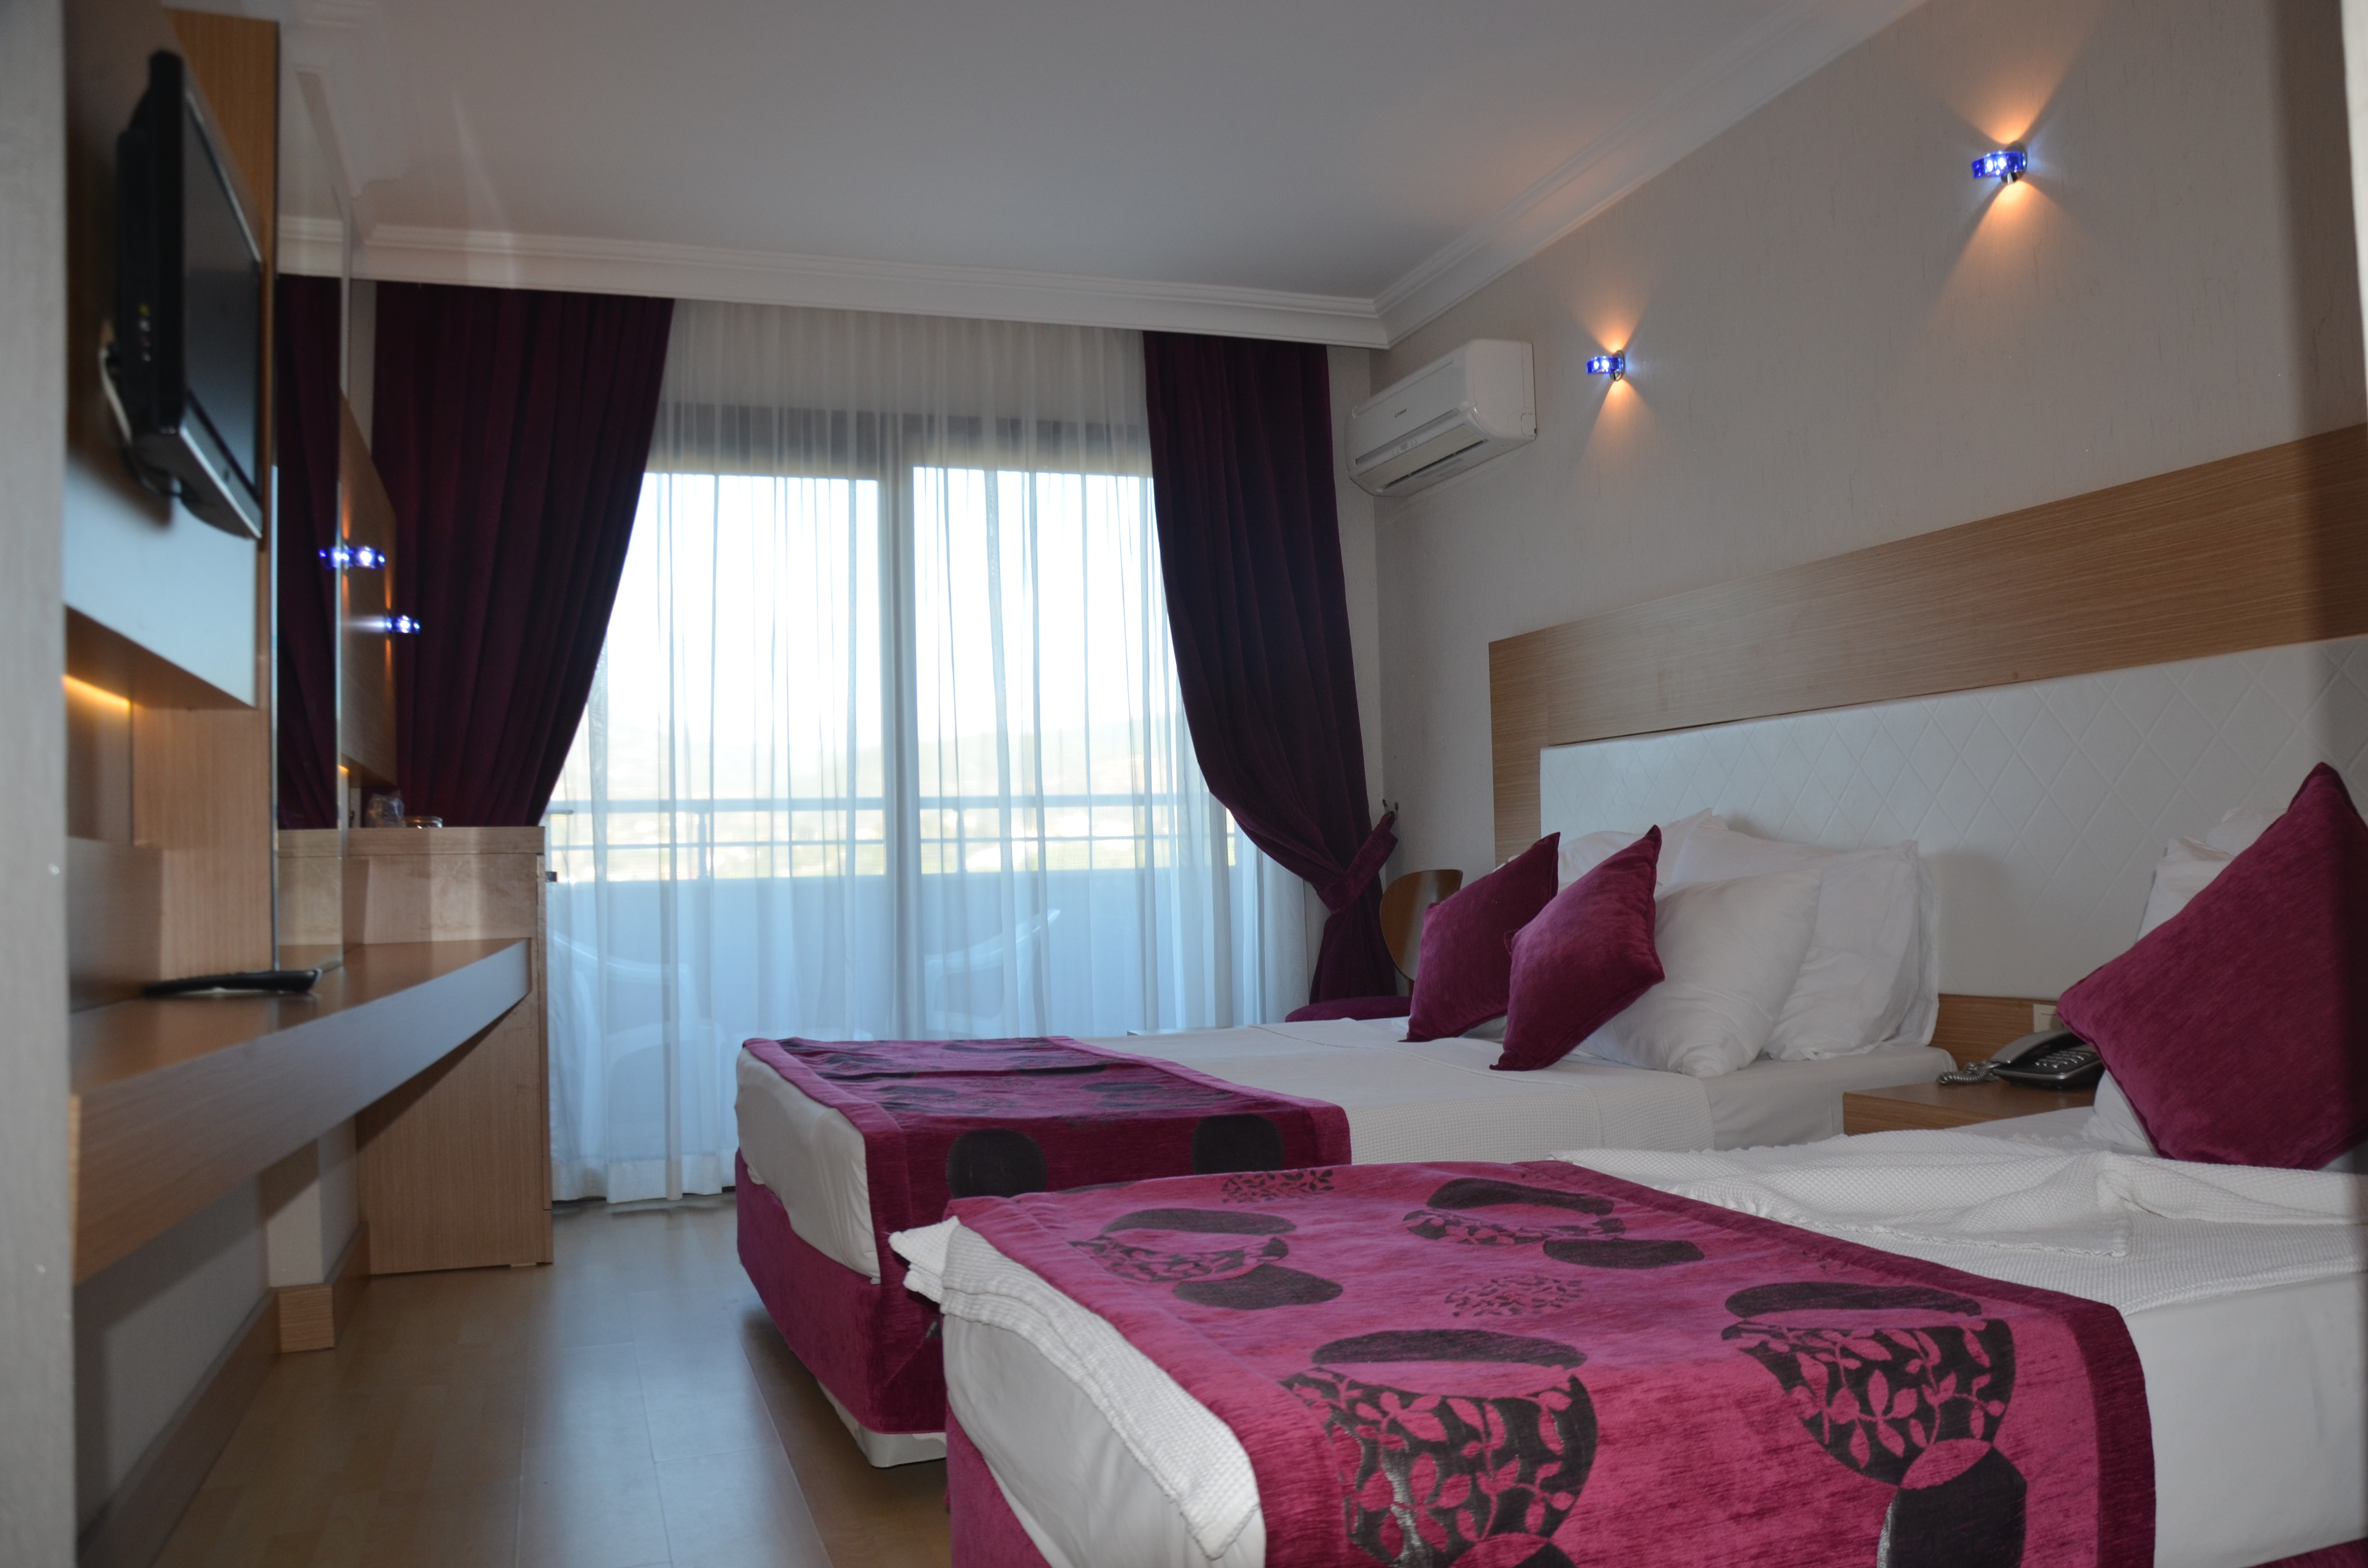 Drita Hotel Resort & Spa